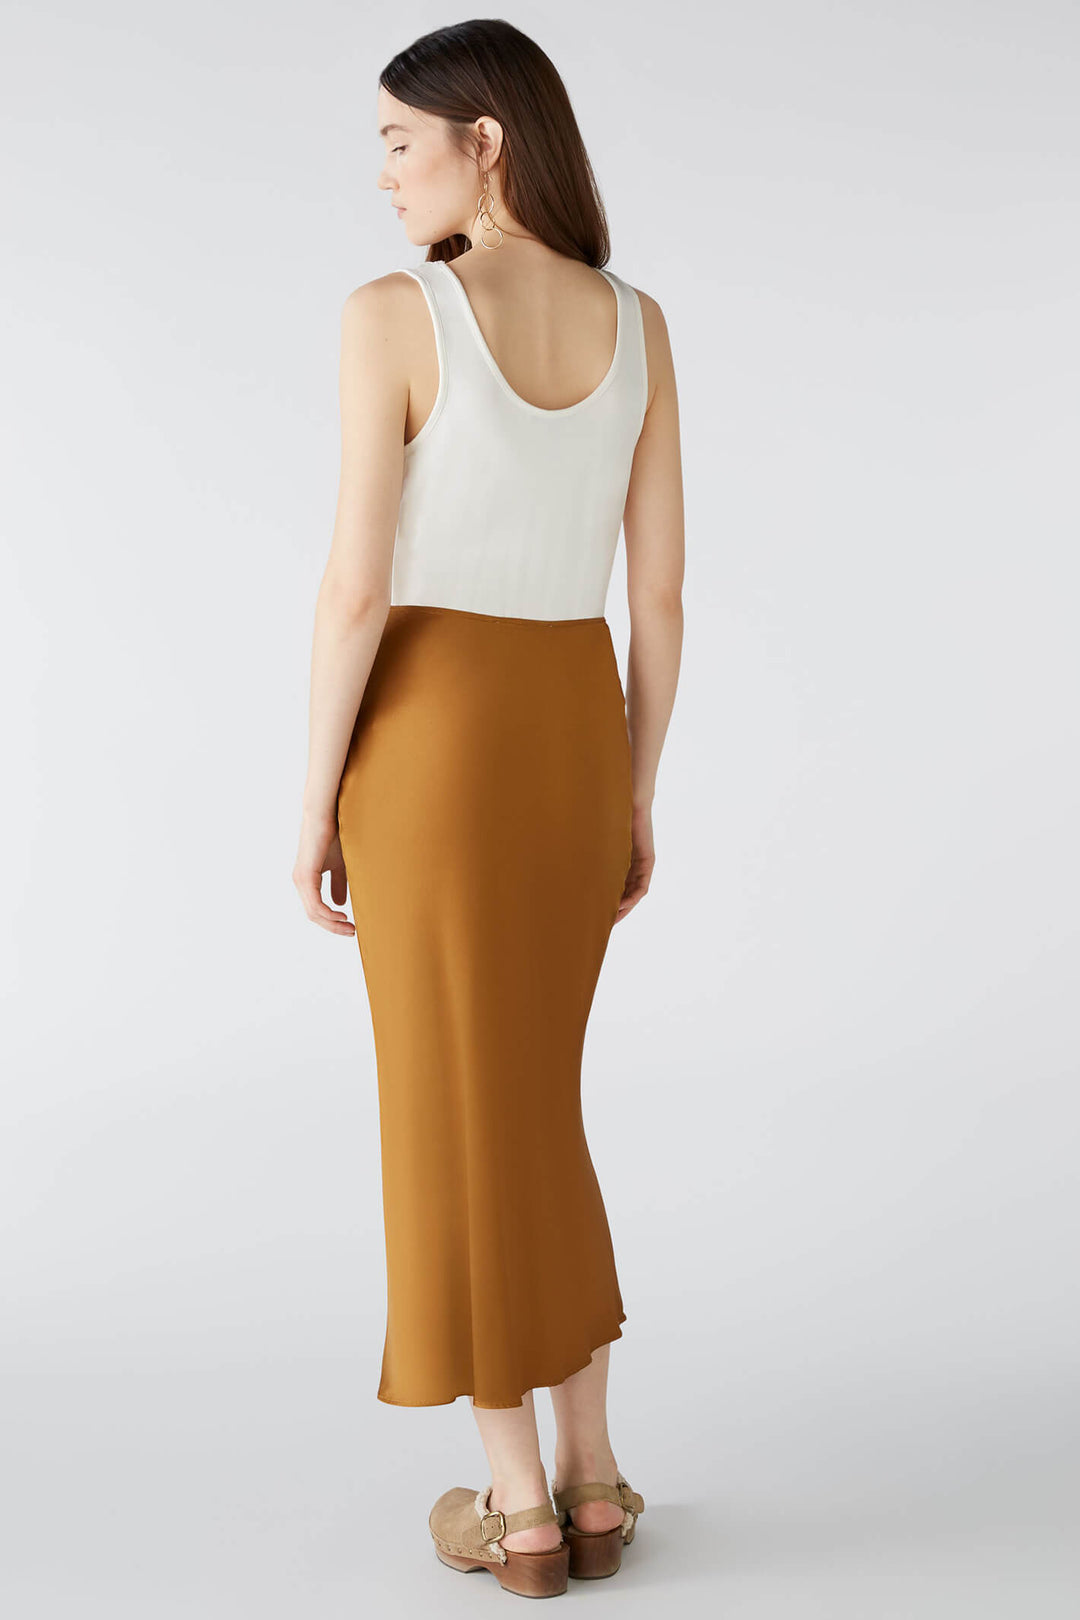 Oui 79970 Dark Camel Midi Fit & Flare Skirt - Olivia Grace Fashion